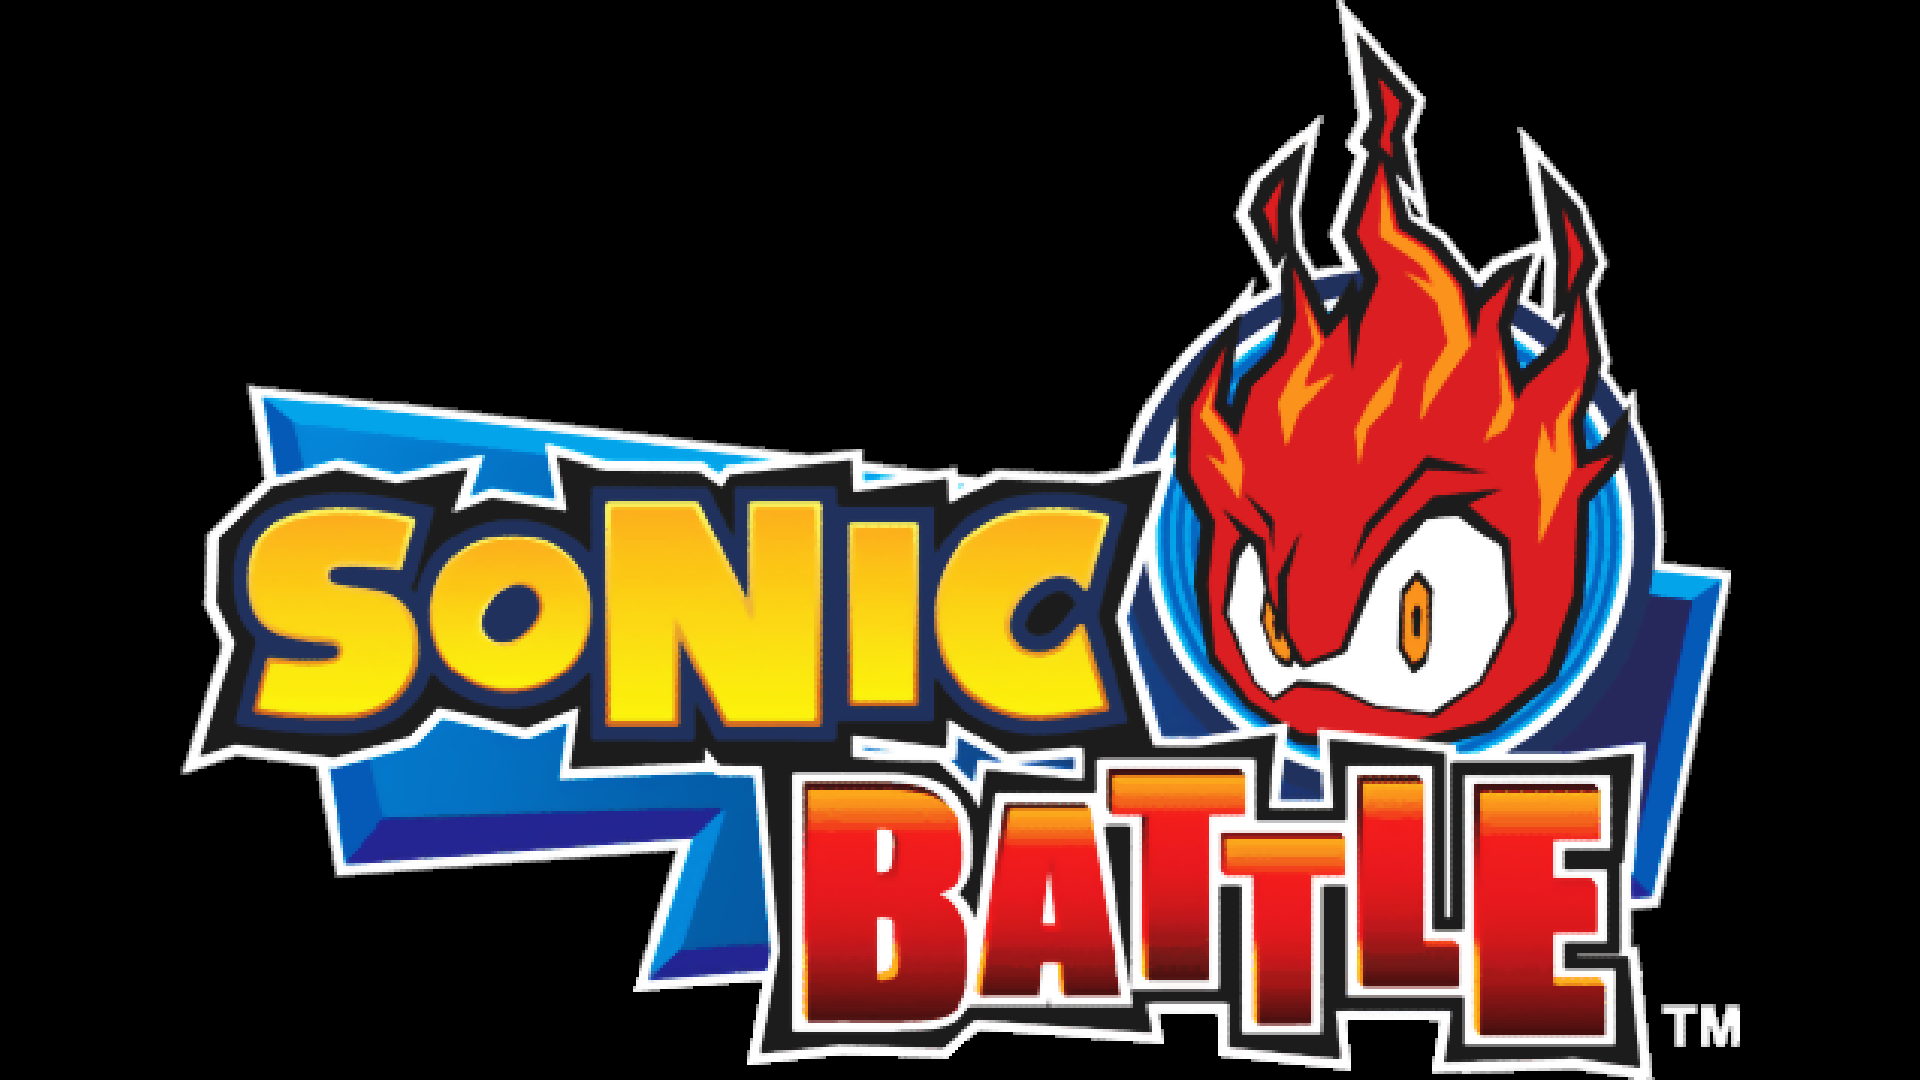 Sonic Battle Logo